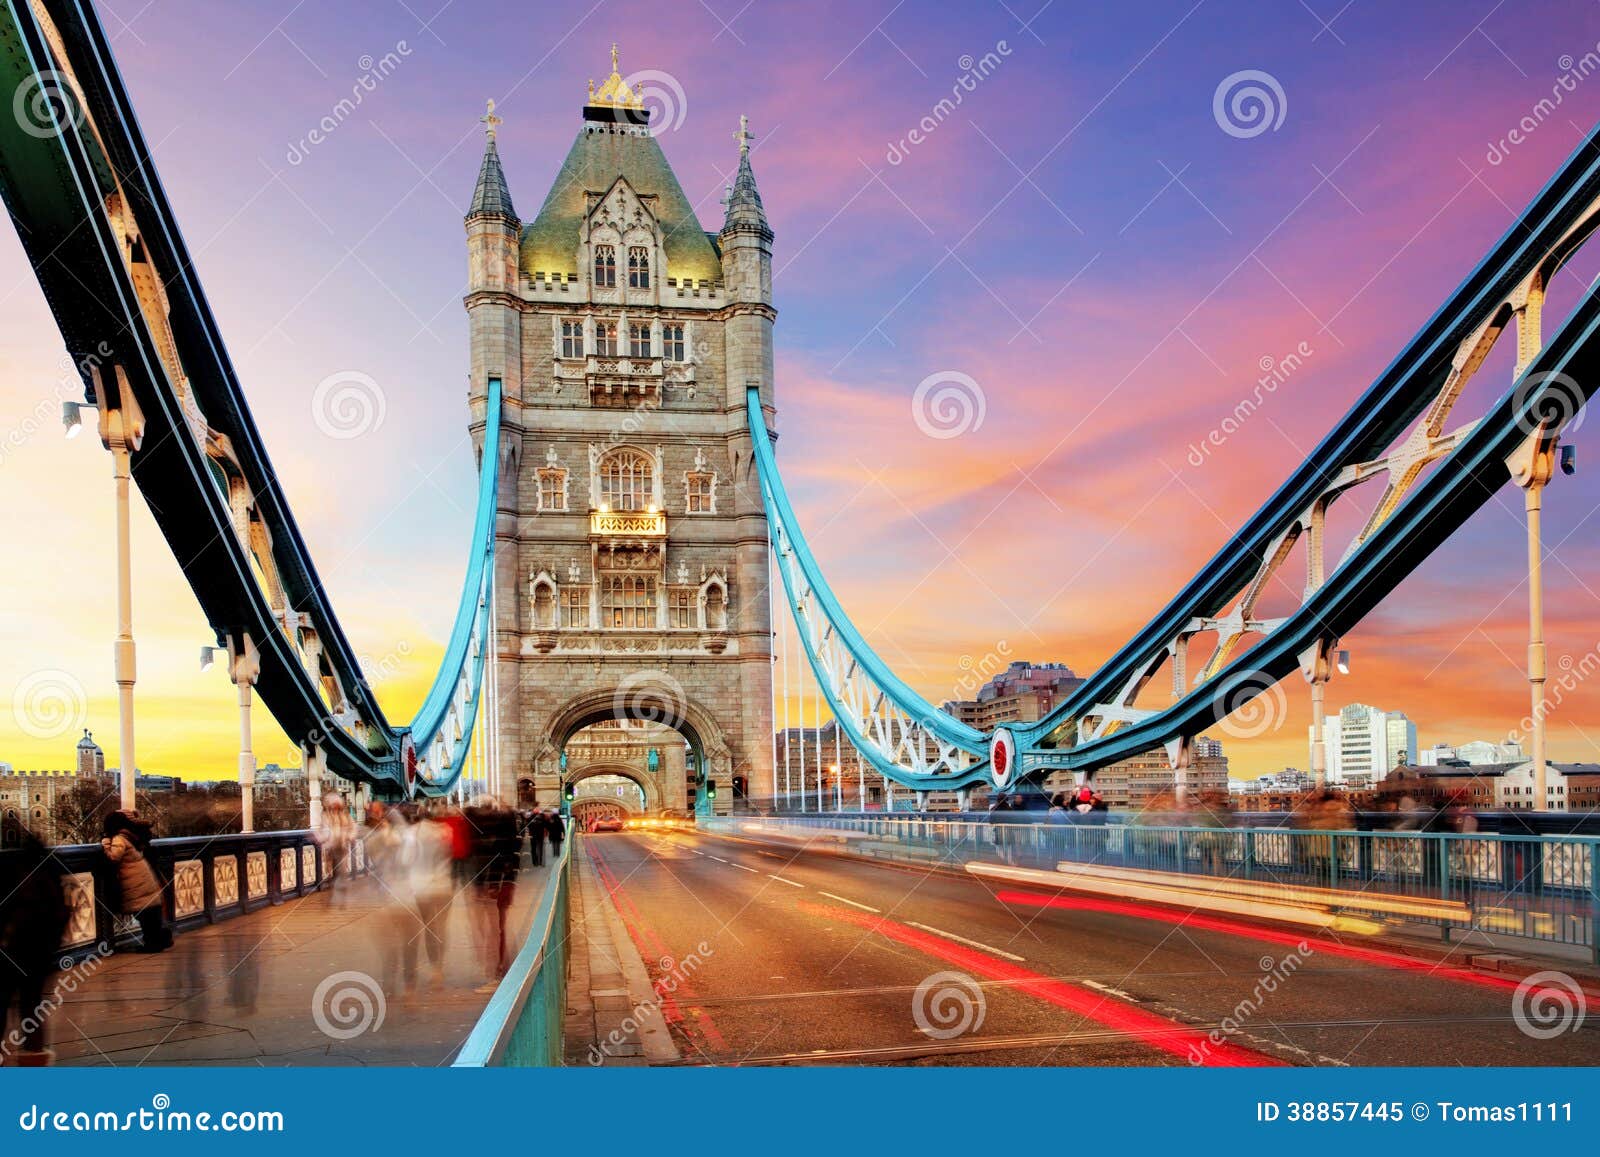 tower bridge - london